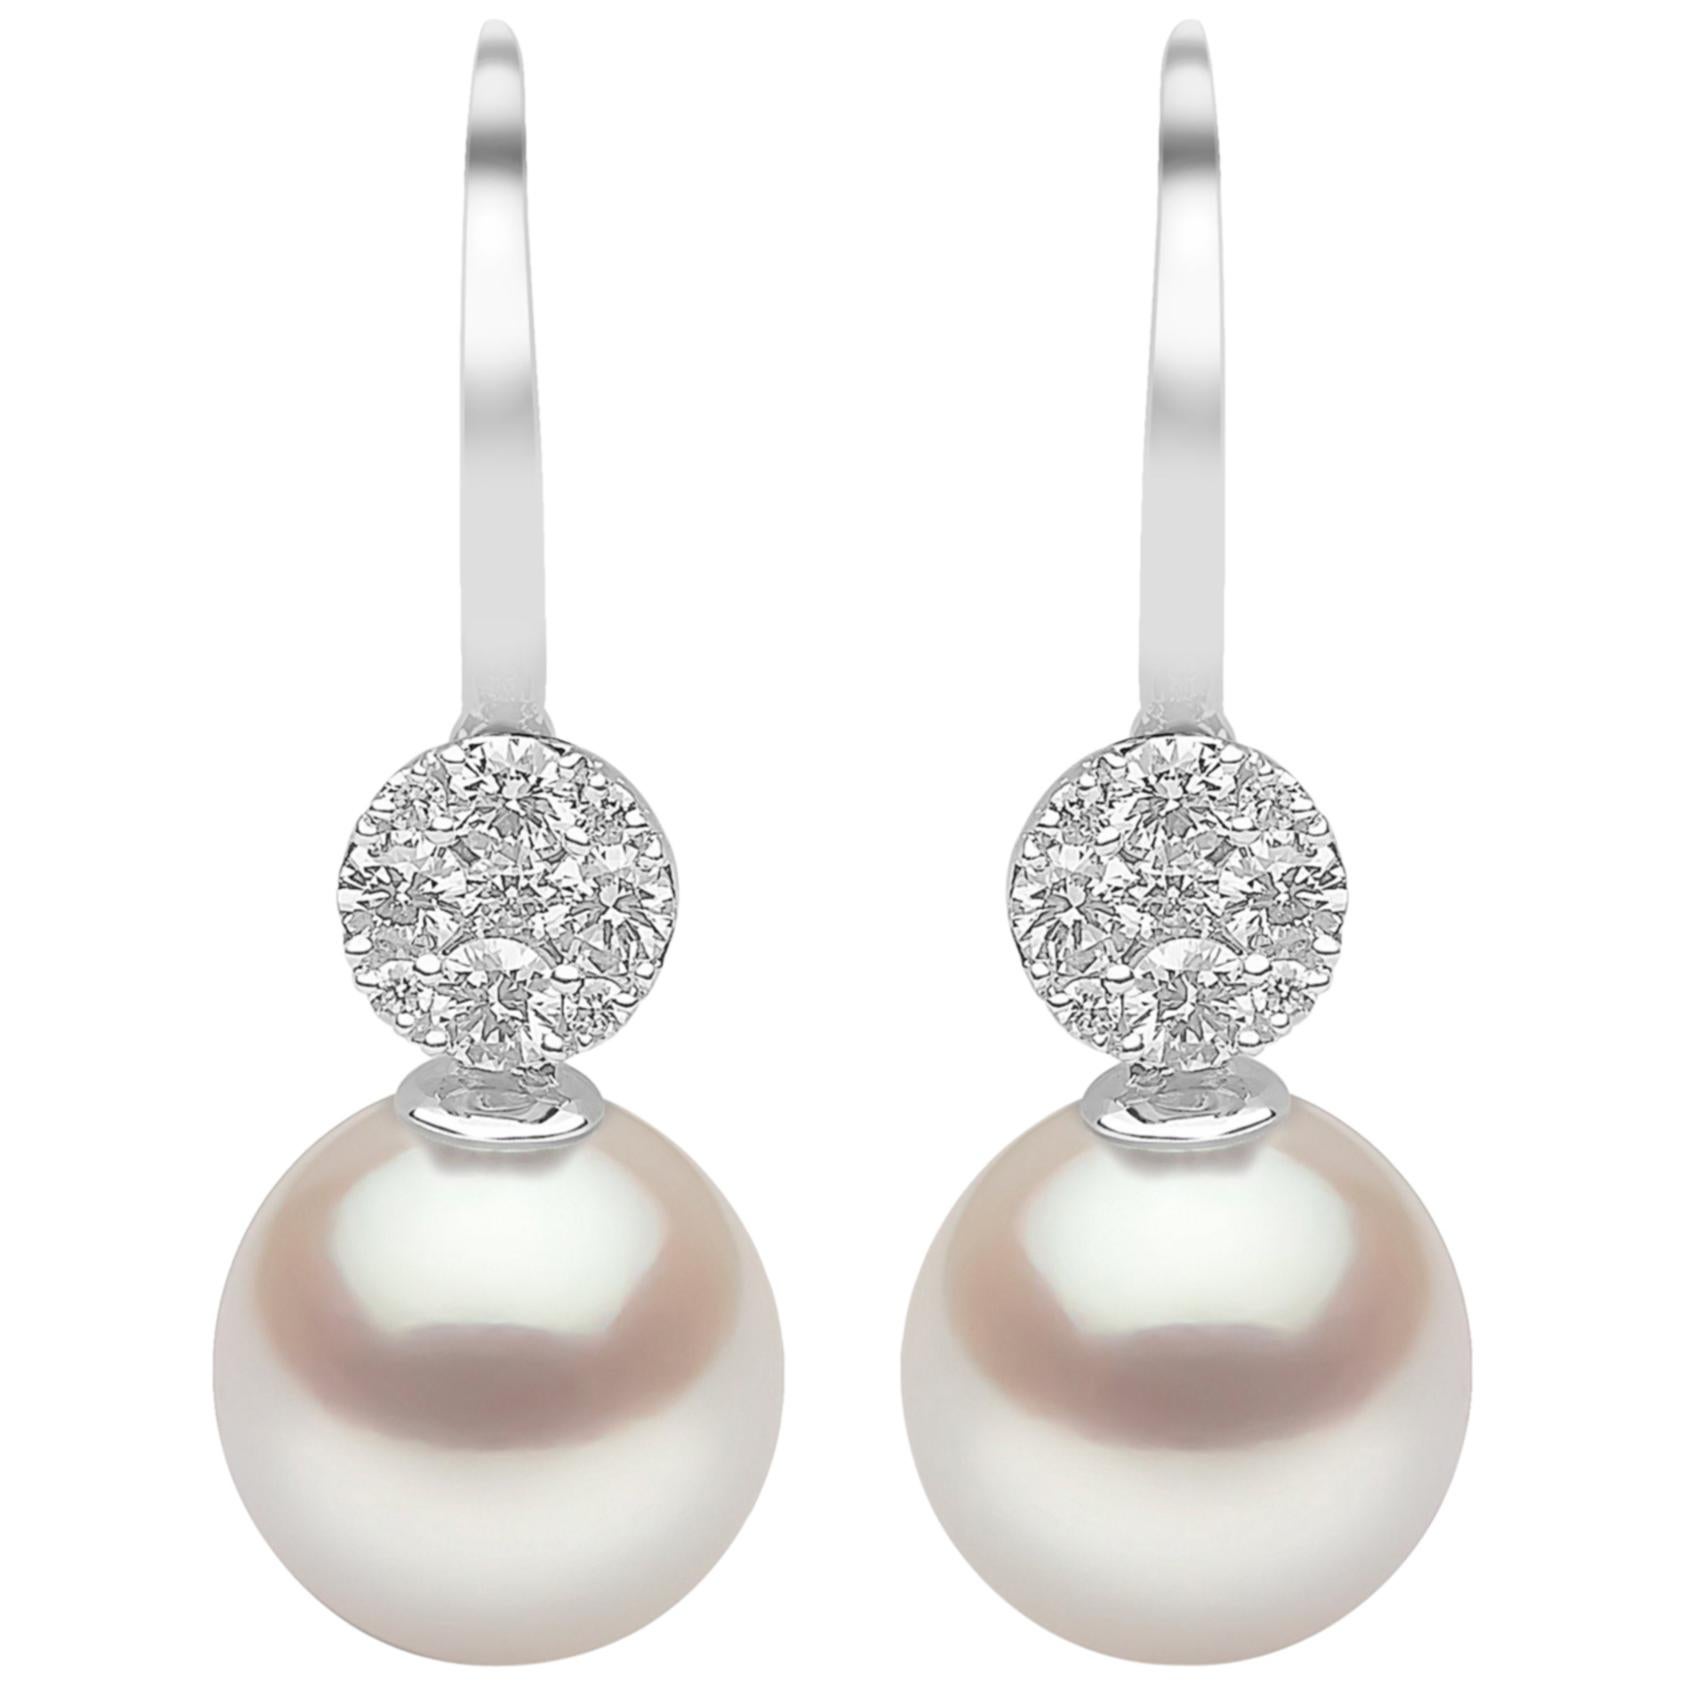 Yoko London South Sea Pearl and Diamond Earrings in 18 Carat White Gold